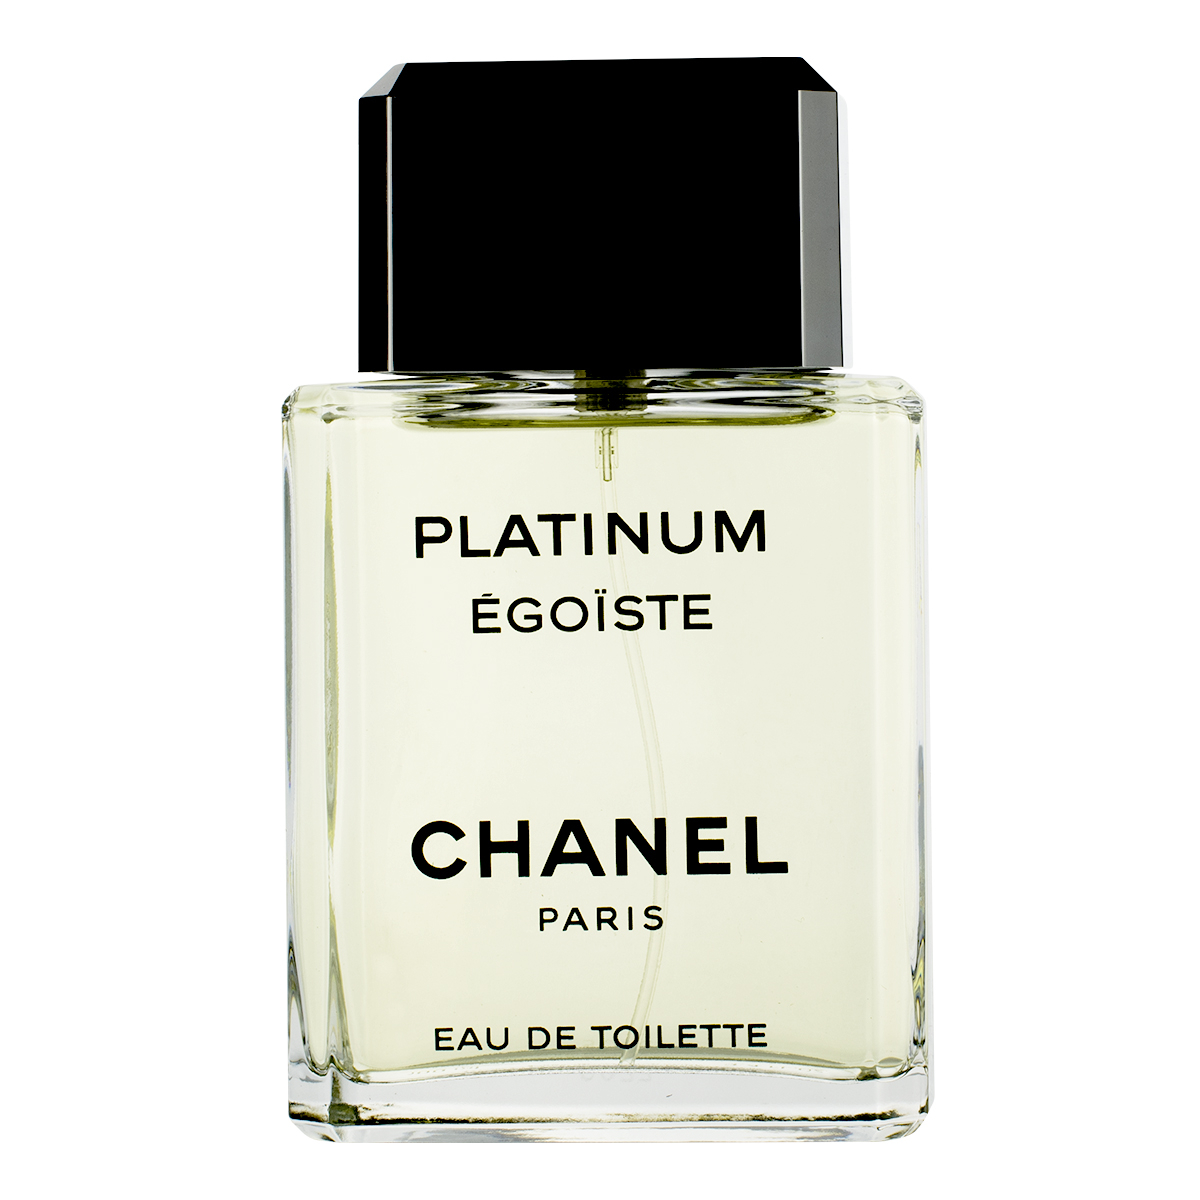 Chanel Egoiste Platinum Eau de Toilette Spray 100ml | Beautybuys Ireland